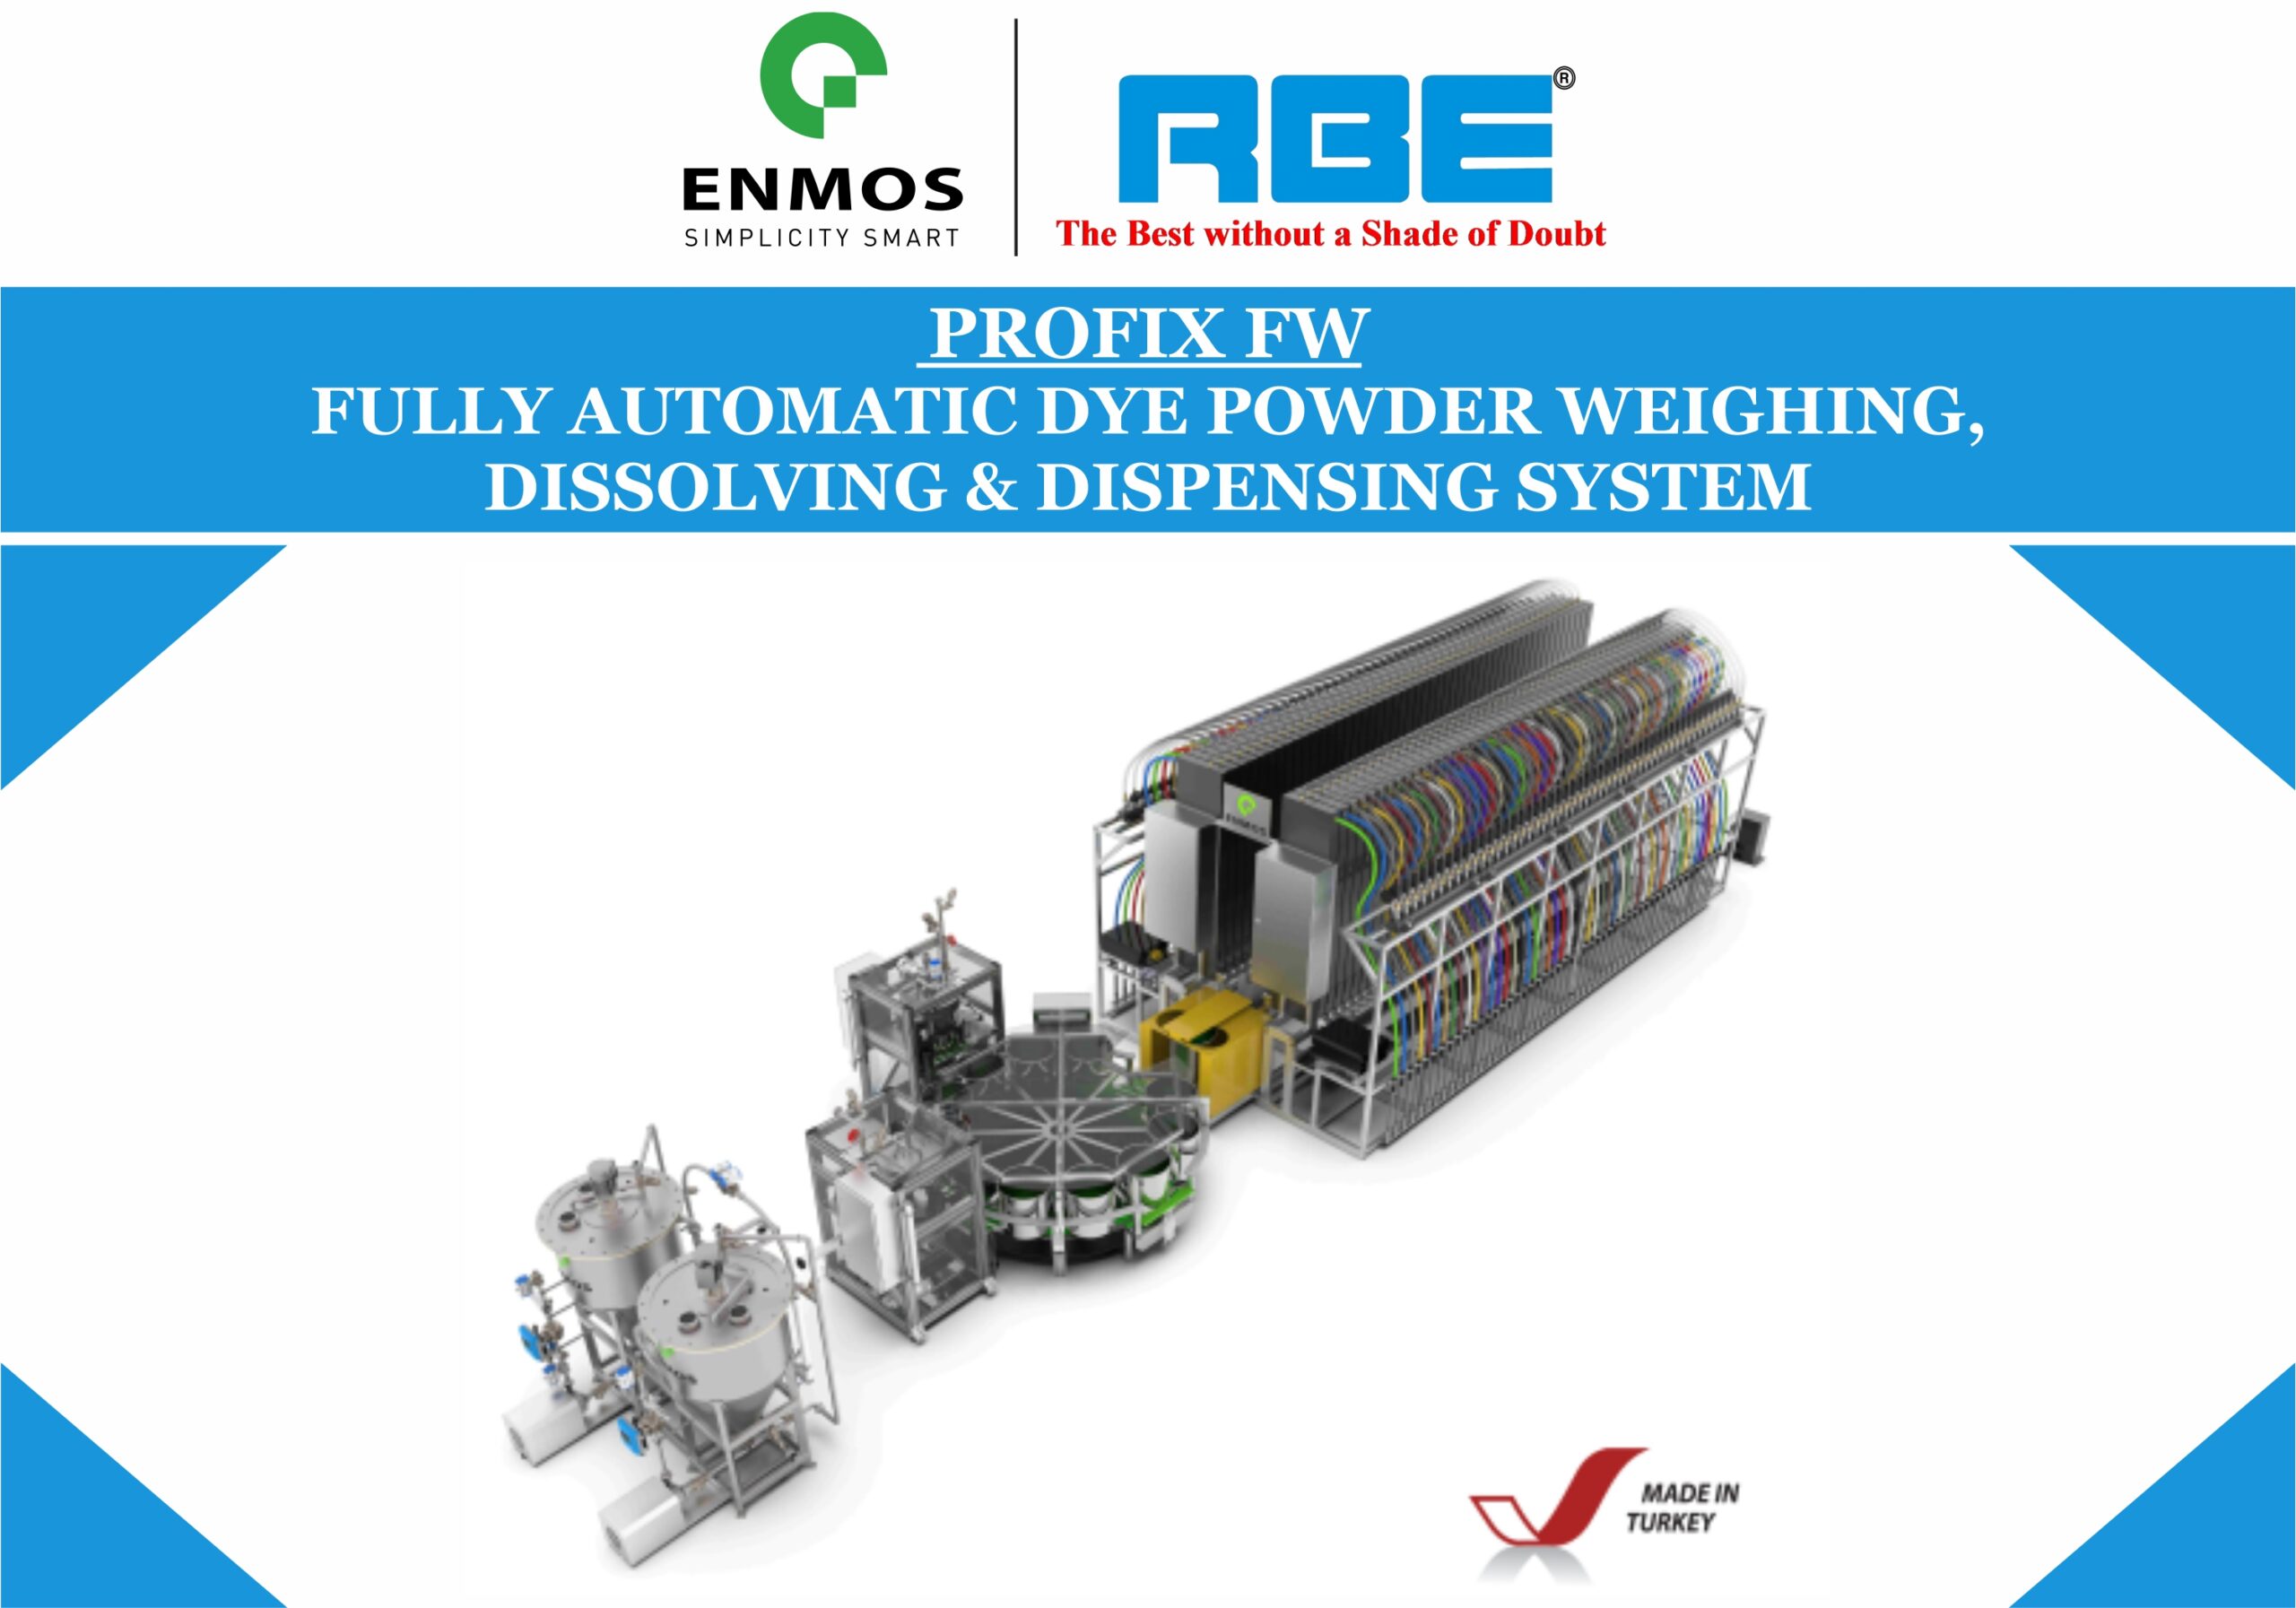 PROFIX FW – An Fully Automatic Dye Powder Weighing, Dissolving & Dispensing System